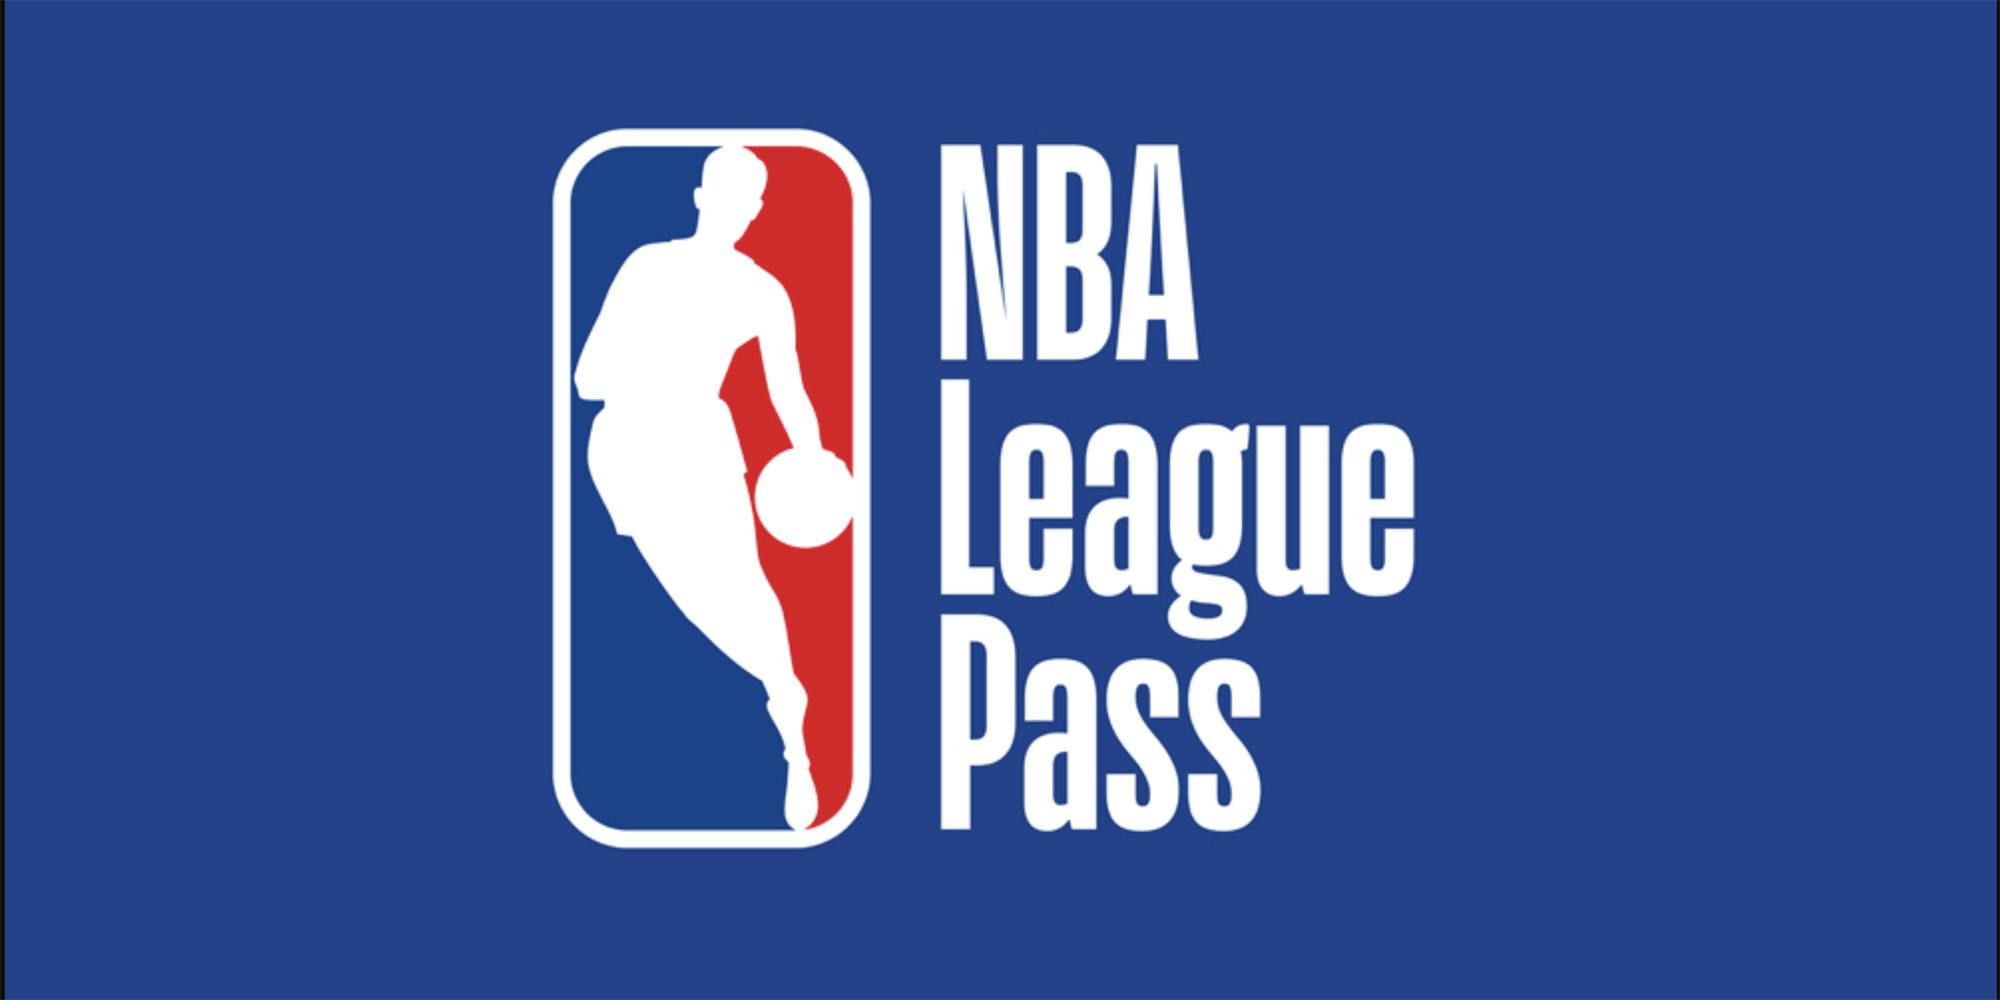 nba-league-pass-logo-2000x1000-1.jpg?auto=compress%2Cformat&ixlib=php-3.3.0